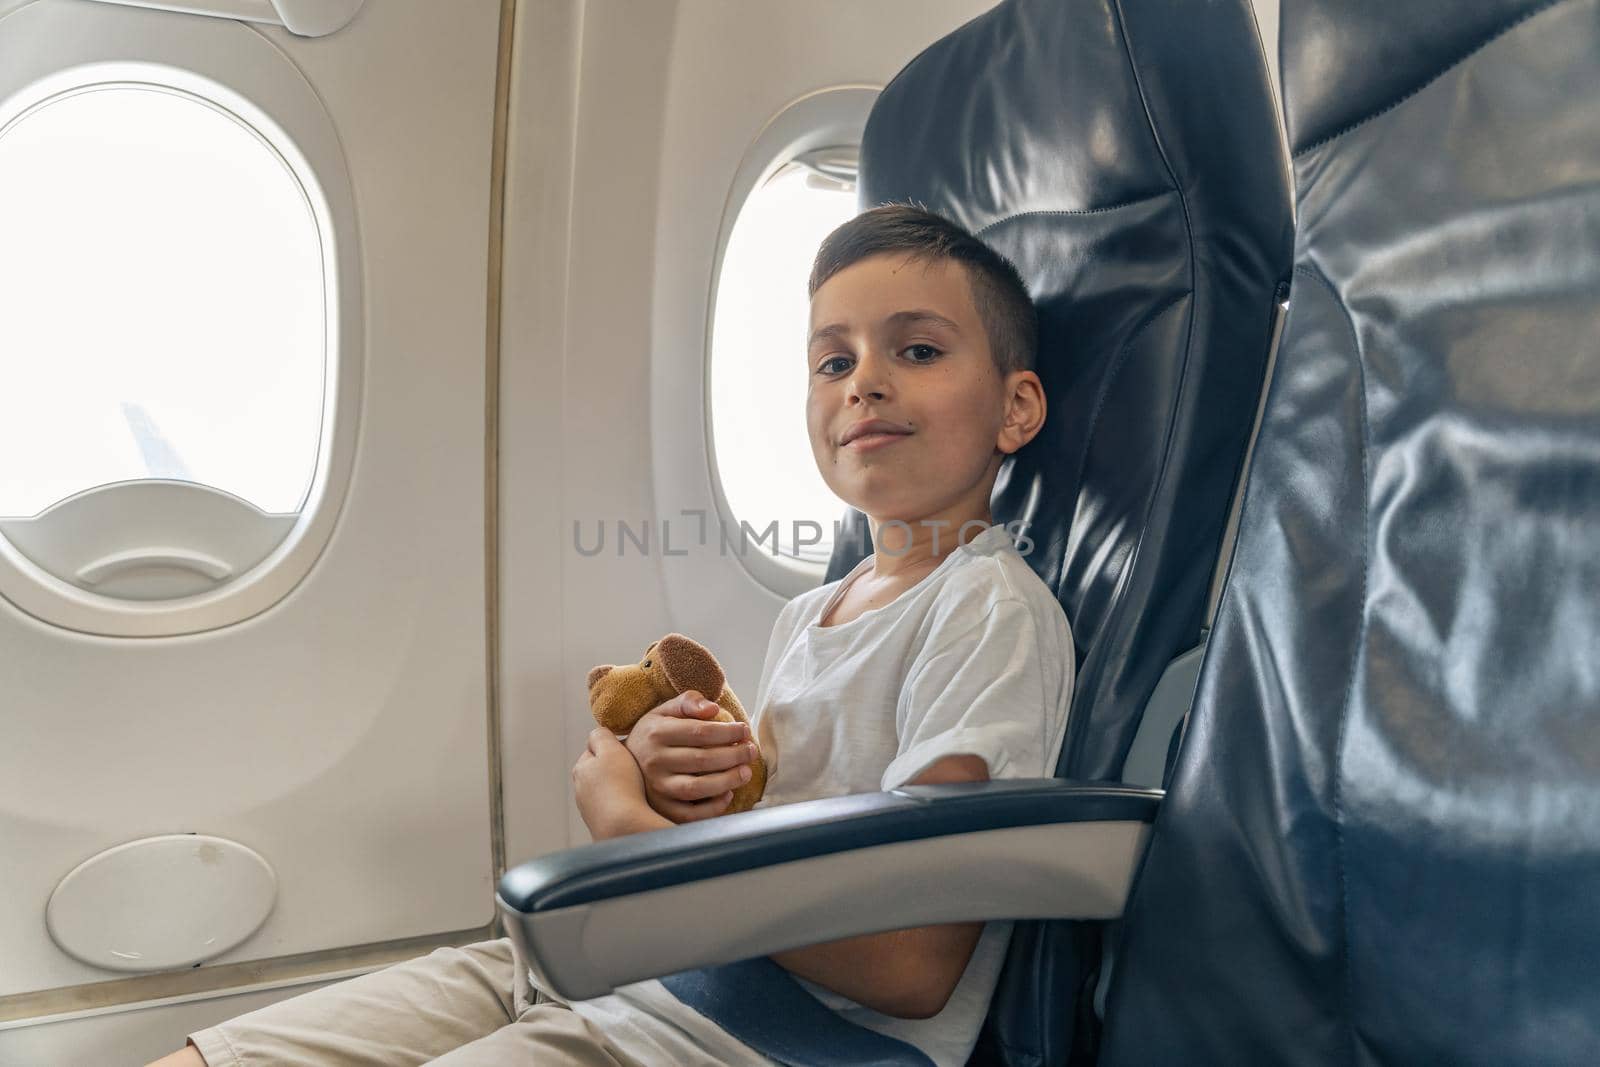 Smiling boy in airplane sitting in window seat by Yaroslav_astakhov